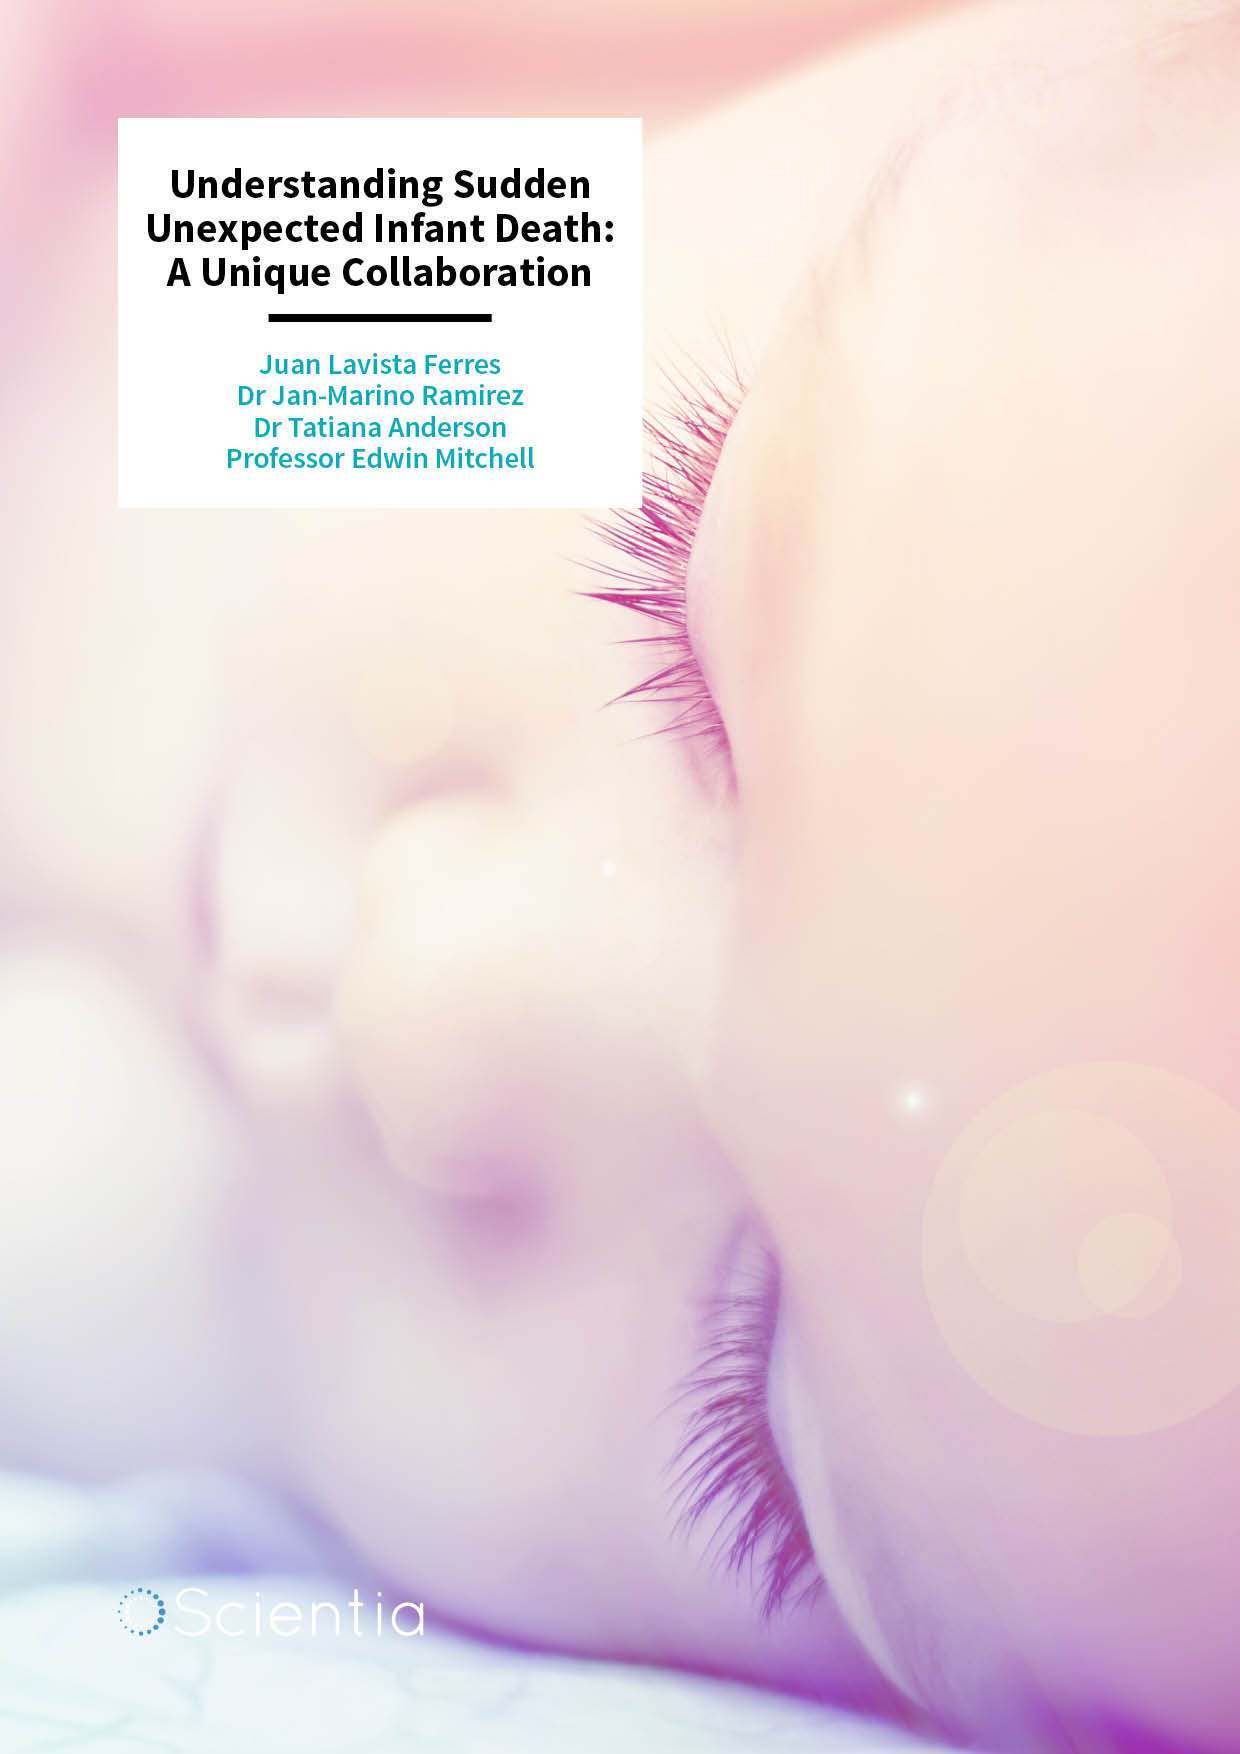 Juan Lavista Ferres | Dr Jan-Marino Ramirez | Dr Tatiana Anderson | Professor Edwin Mitchell – Understanding Sudden Unexpected Infant Death: A Unique Collaboration